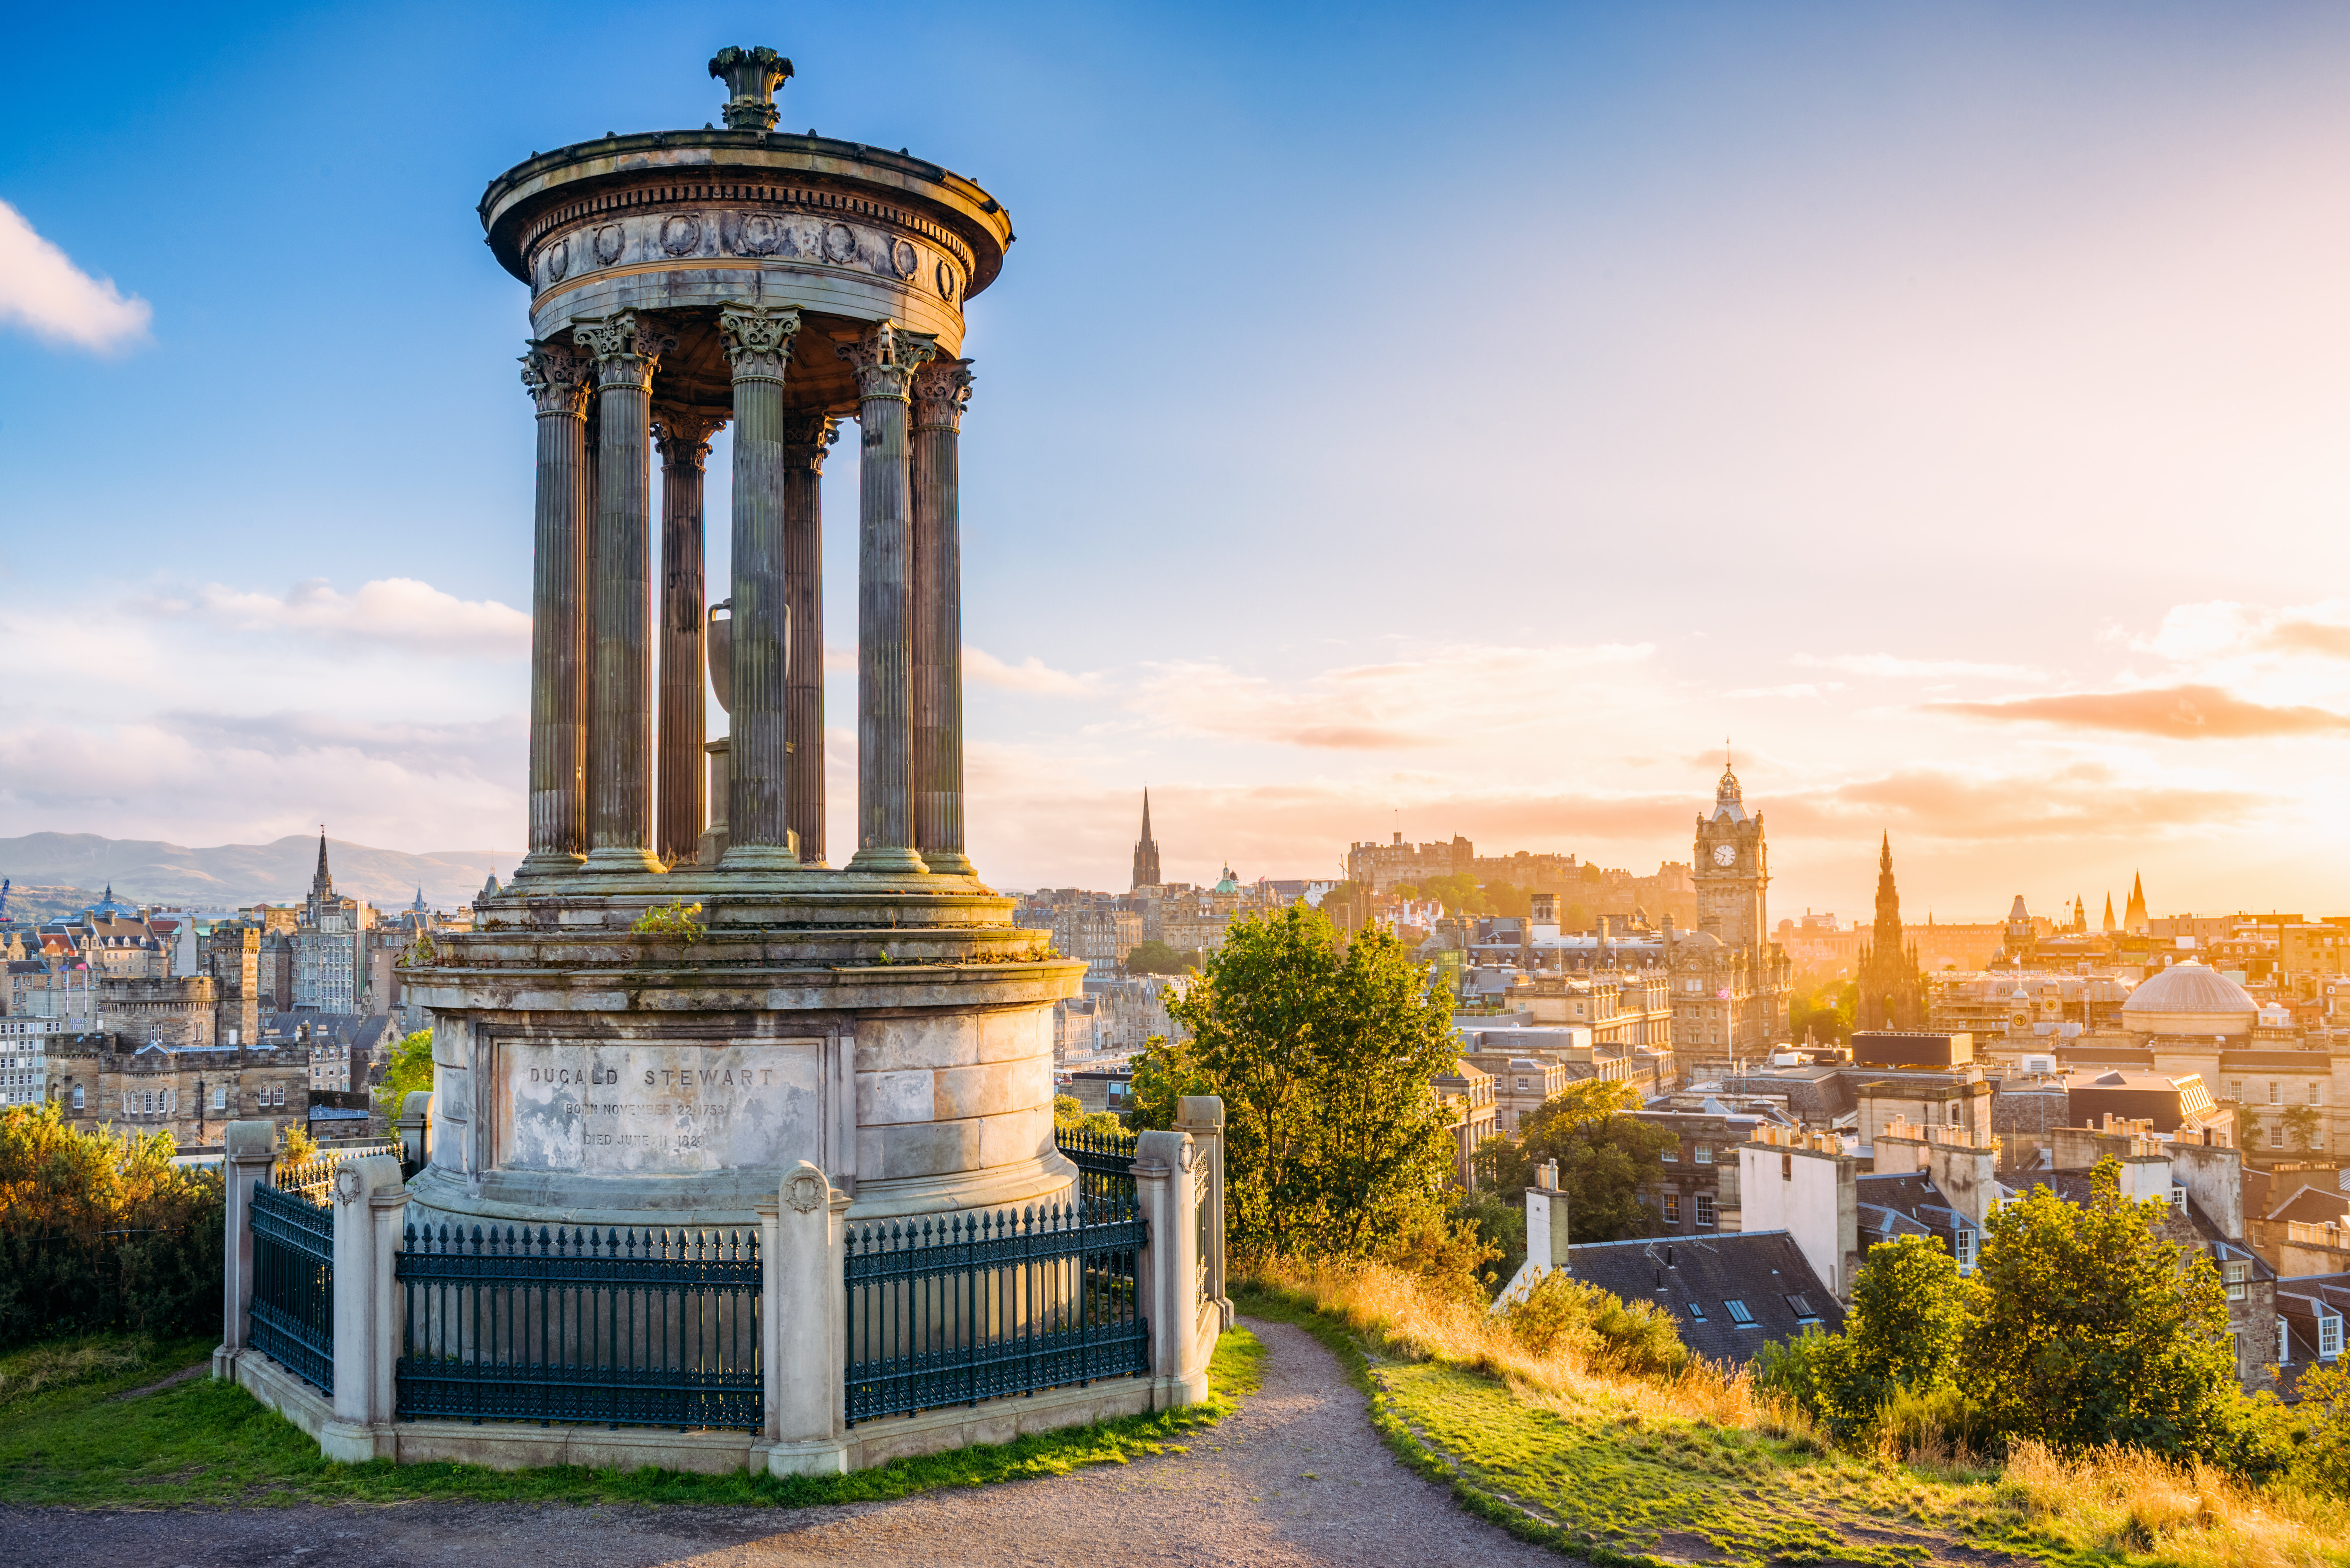 An ancient bell tower in Edinburgh